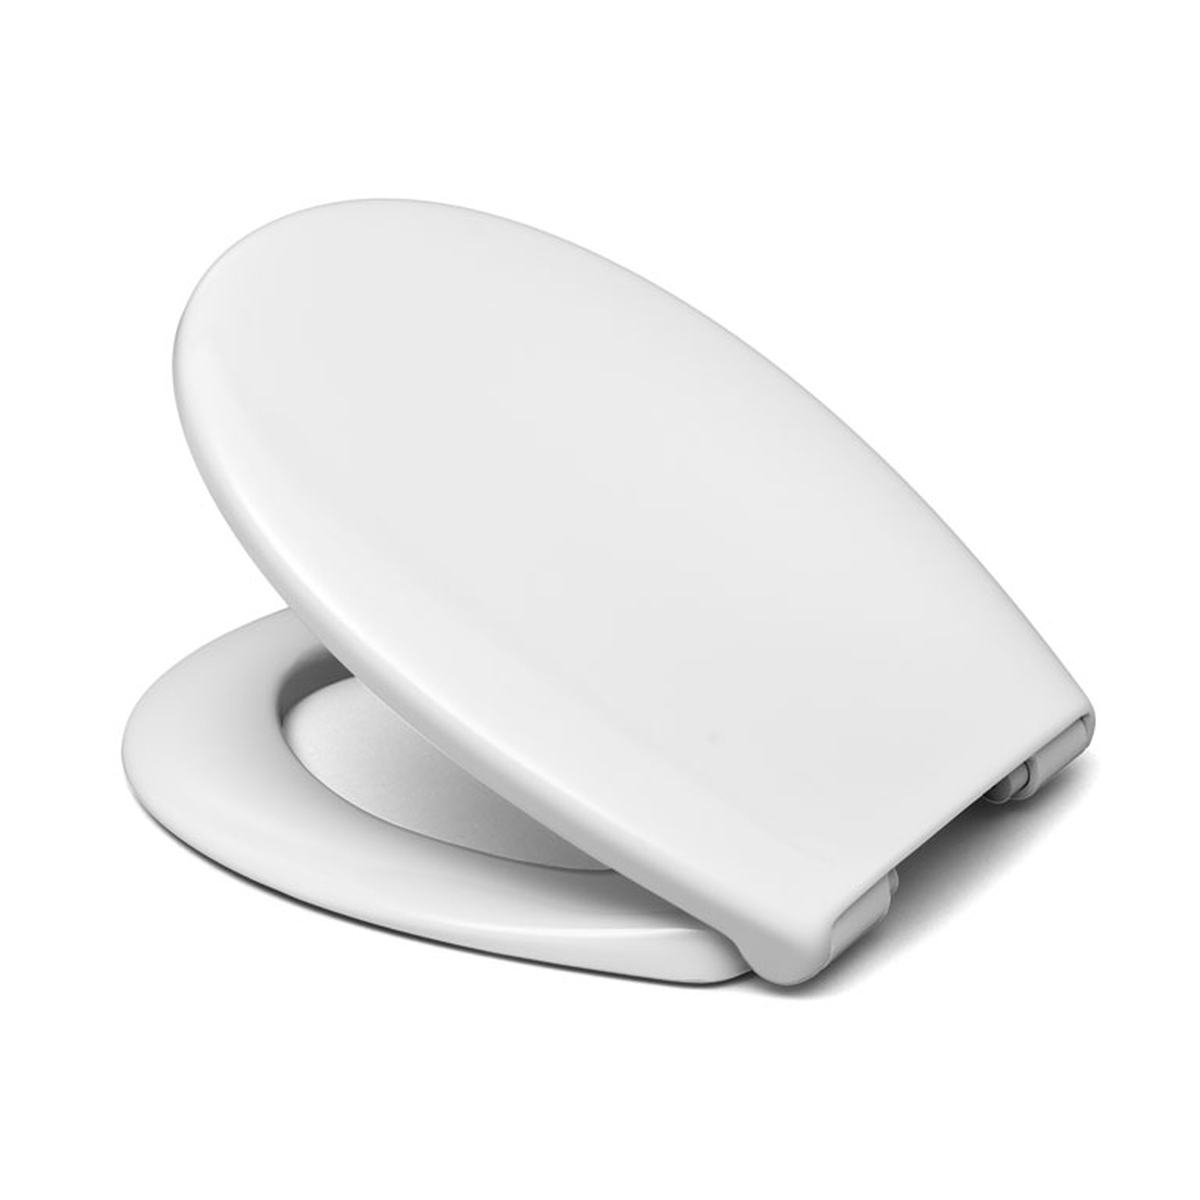 Toalettsete hvit softclose - Universal - Adora